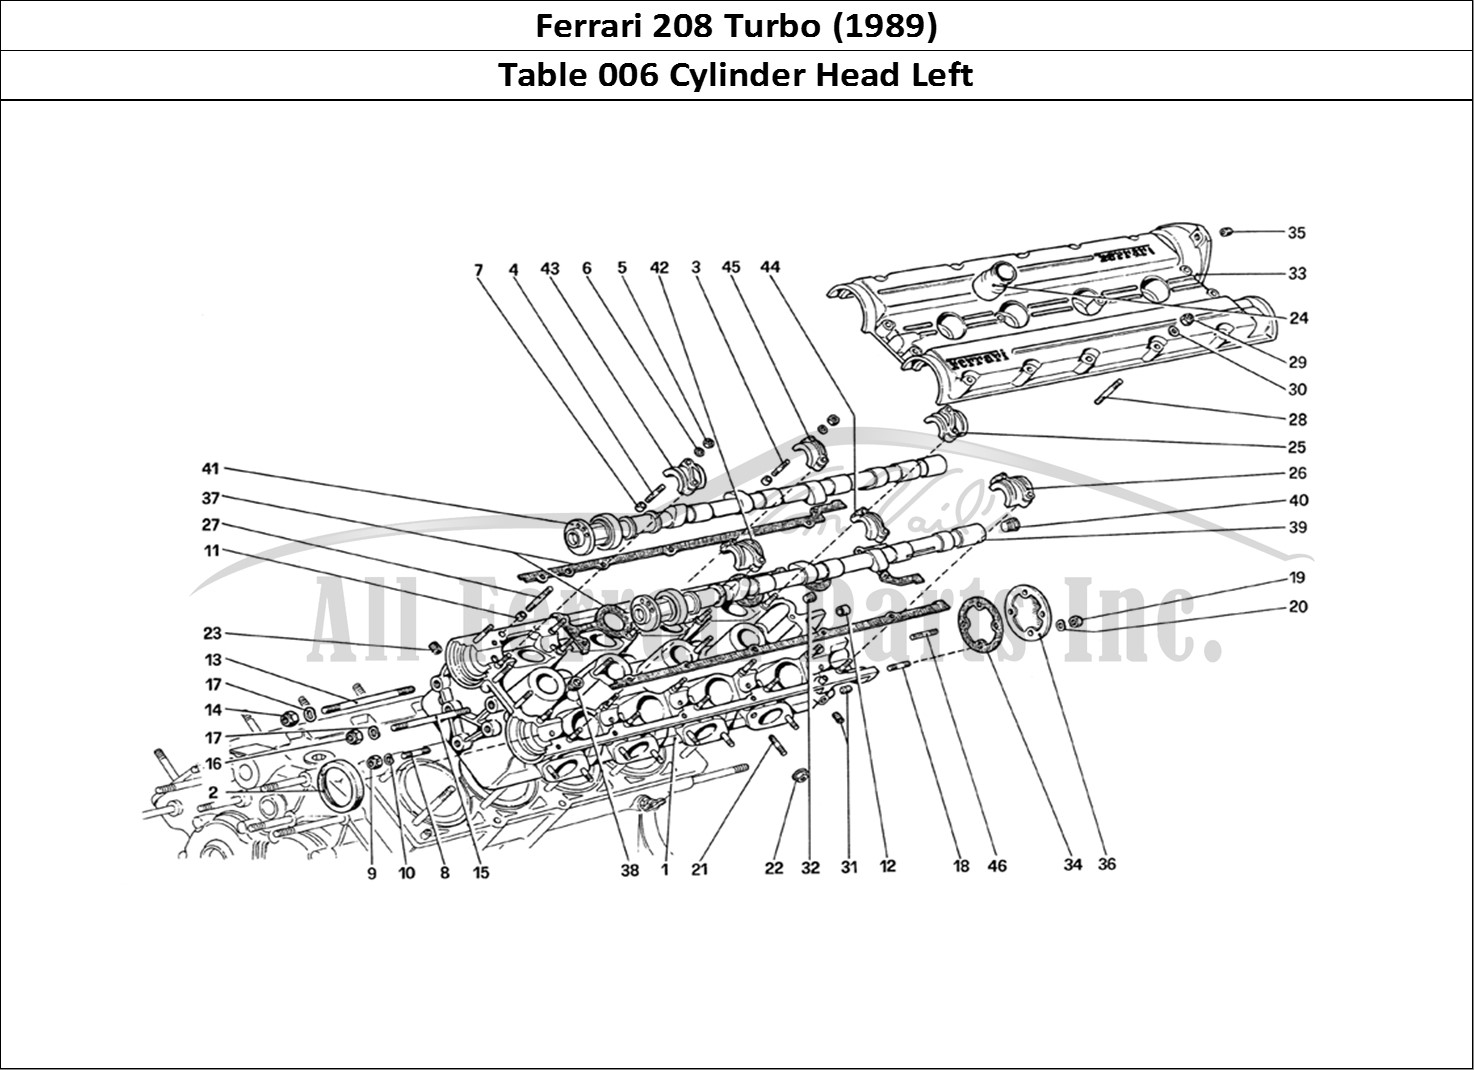 Ferrari Parts Ferrari 208 Turbo (1989) Page 006 Cylinder Head (Left)